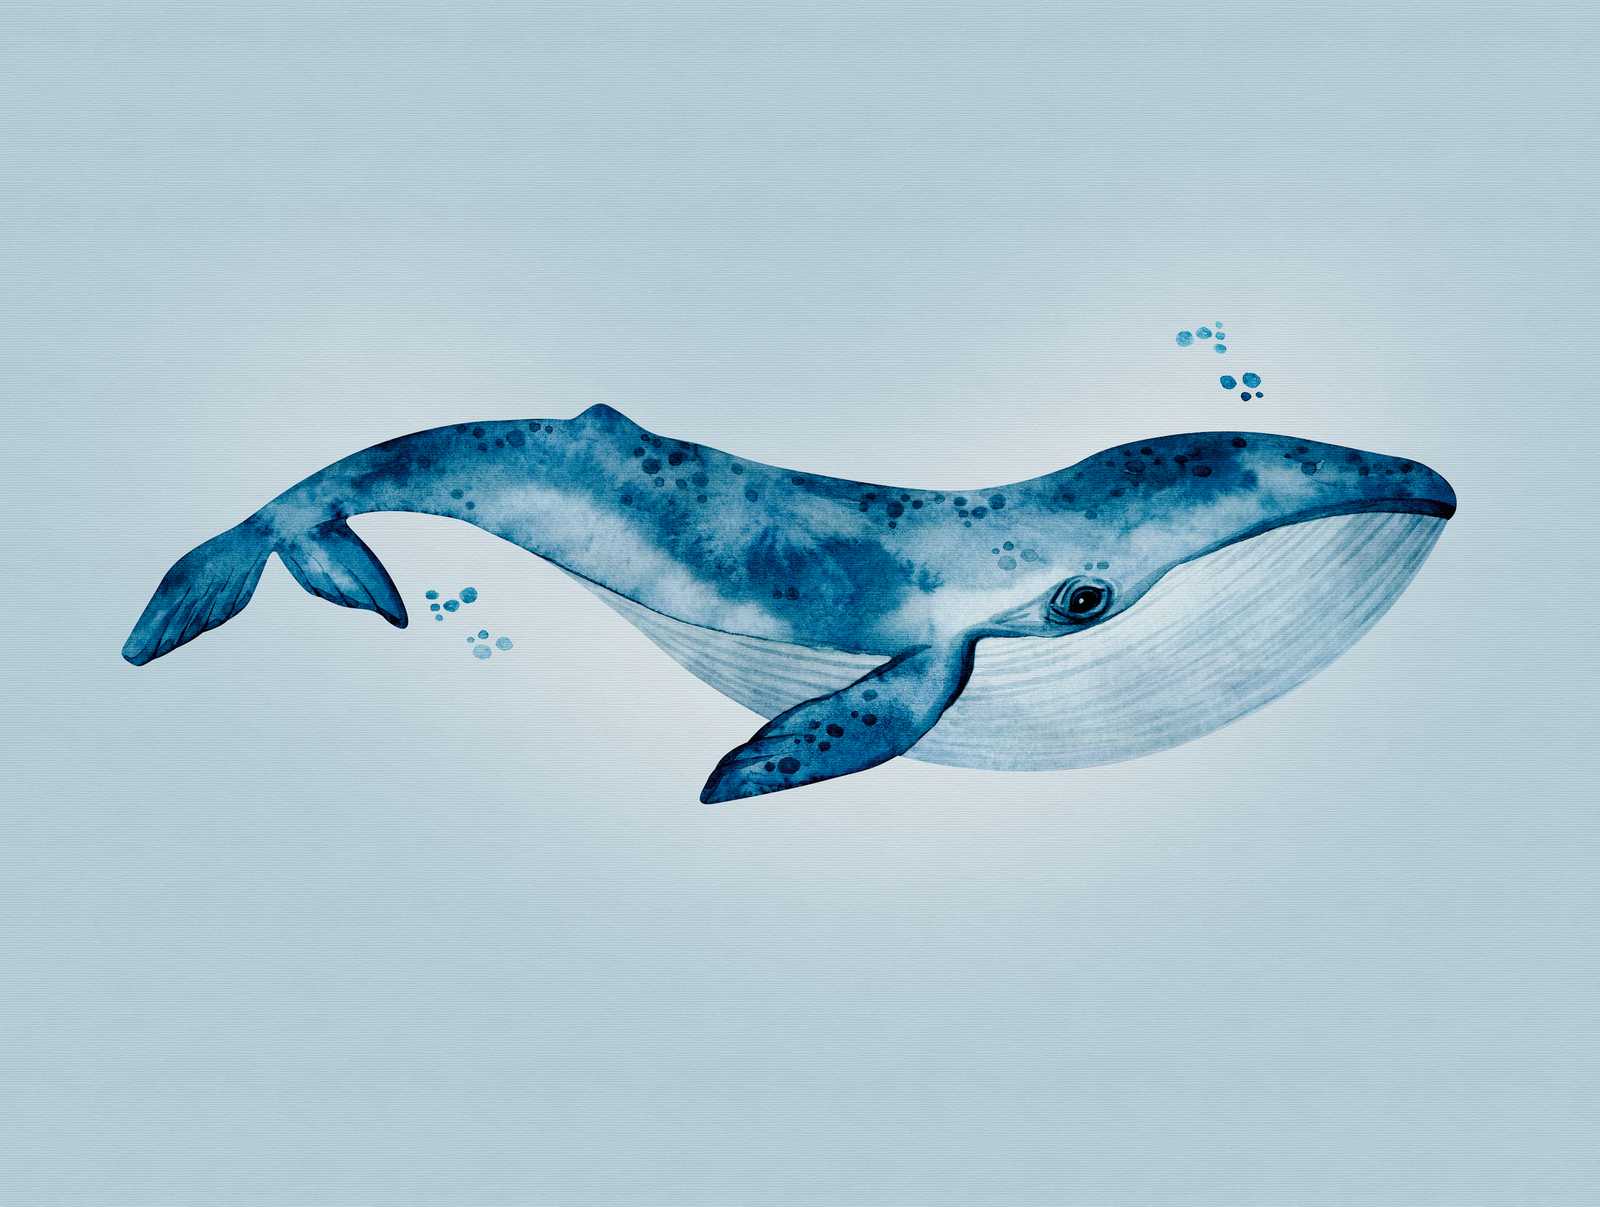             Wallpaper novelty - motif wallpaper blue whale under water watercolour
        